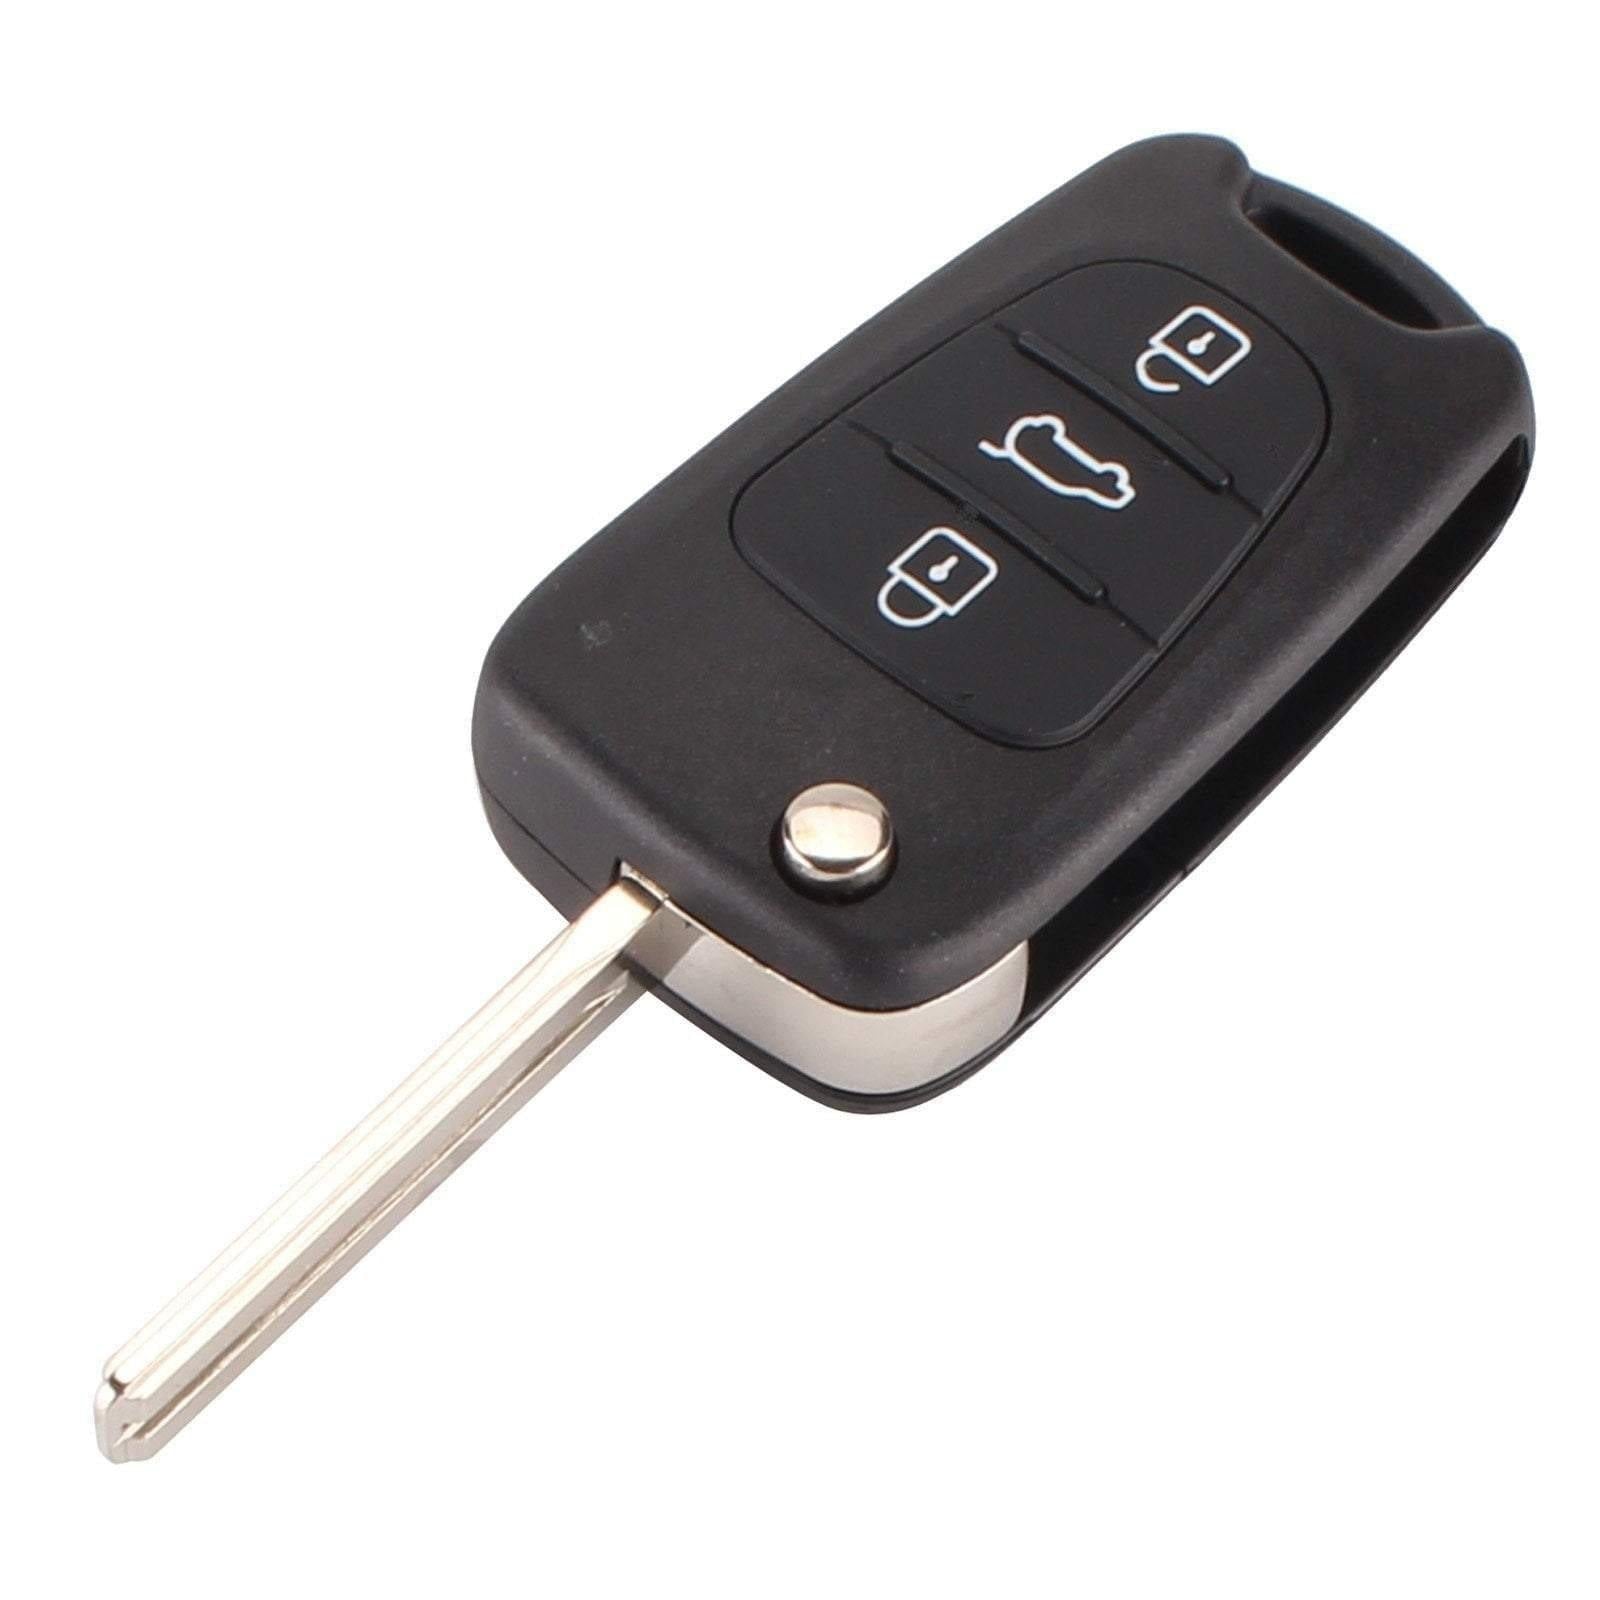 Fekete  színű, 3 gombos Hyundai kulcs, bicskakulcs.